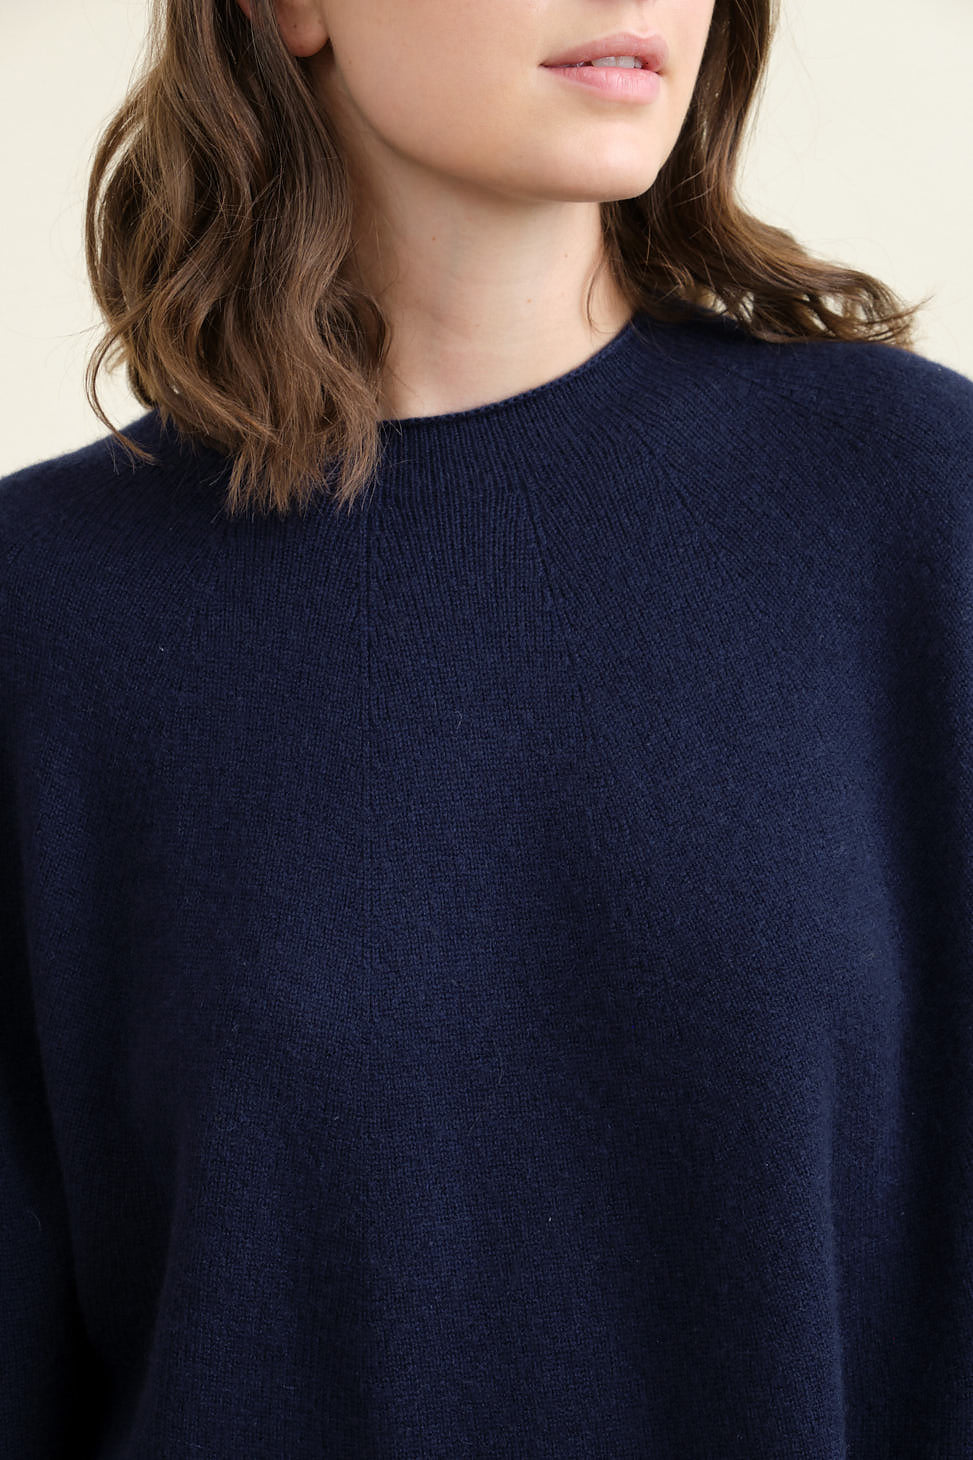 Neckline on Kishik Wholegarment Knitted Sweater